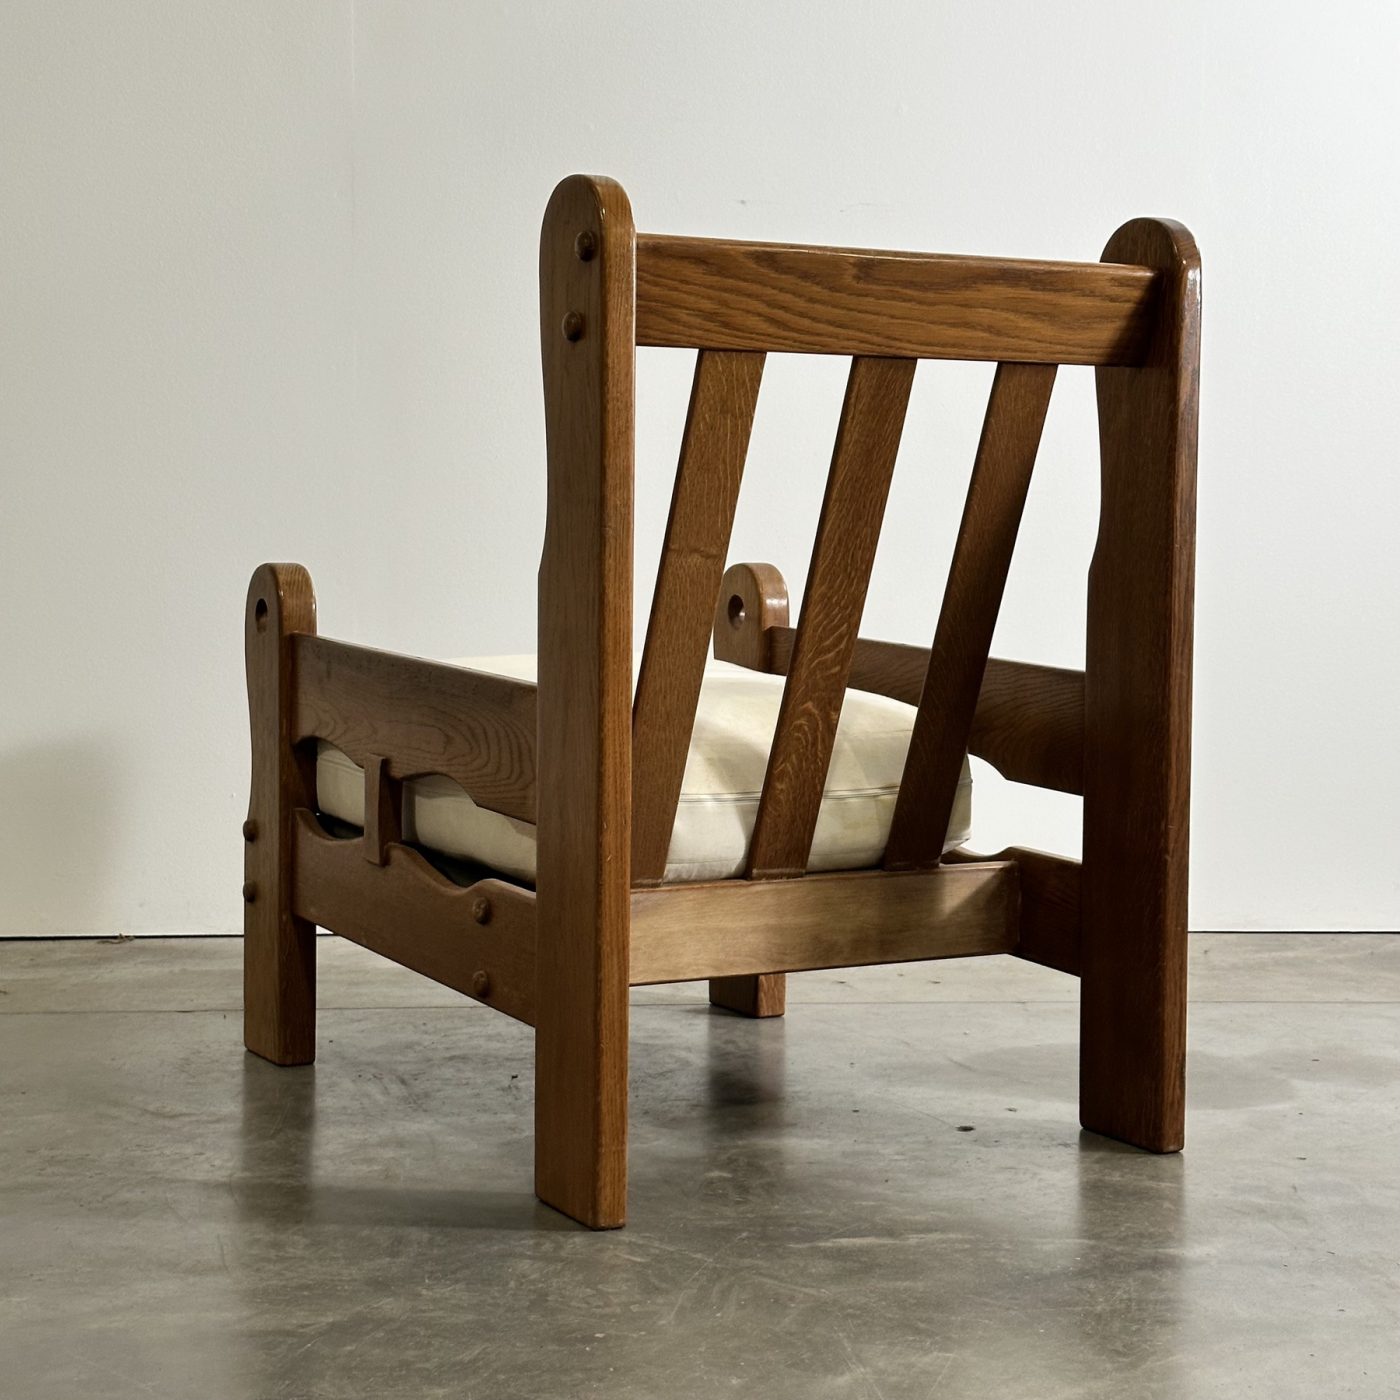 objet-vagabond-brutalist-armchairs0005